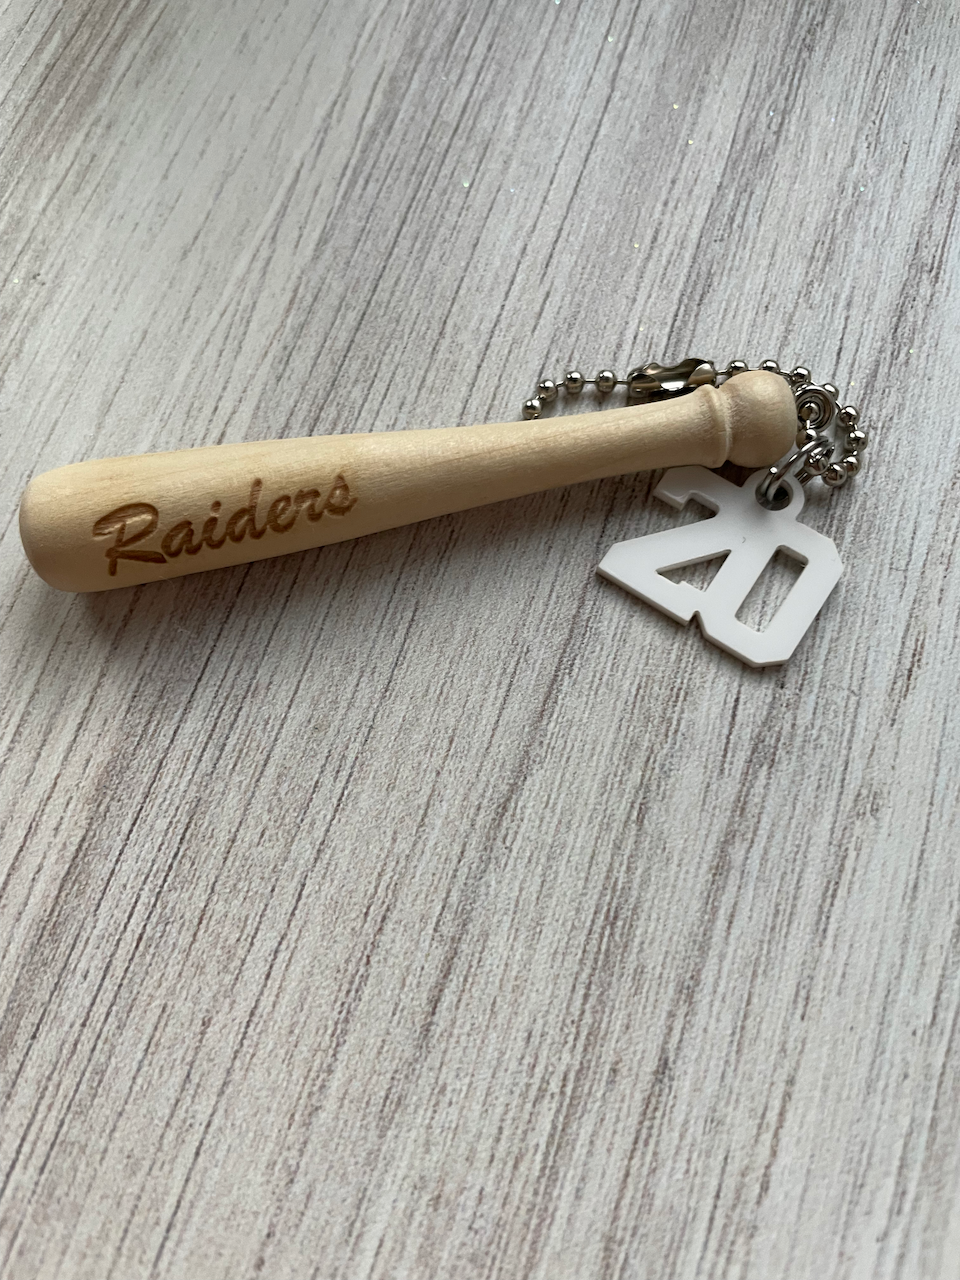 Personalized Mini Baseball Bat Keychain/Backpack Tag - Laser Engraved